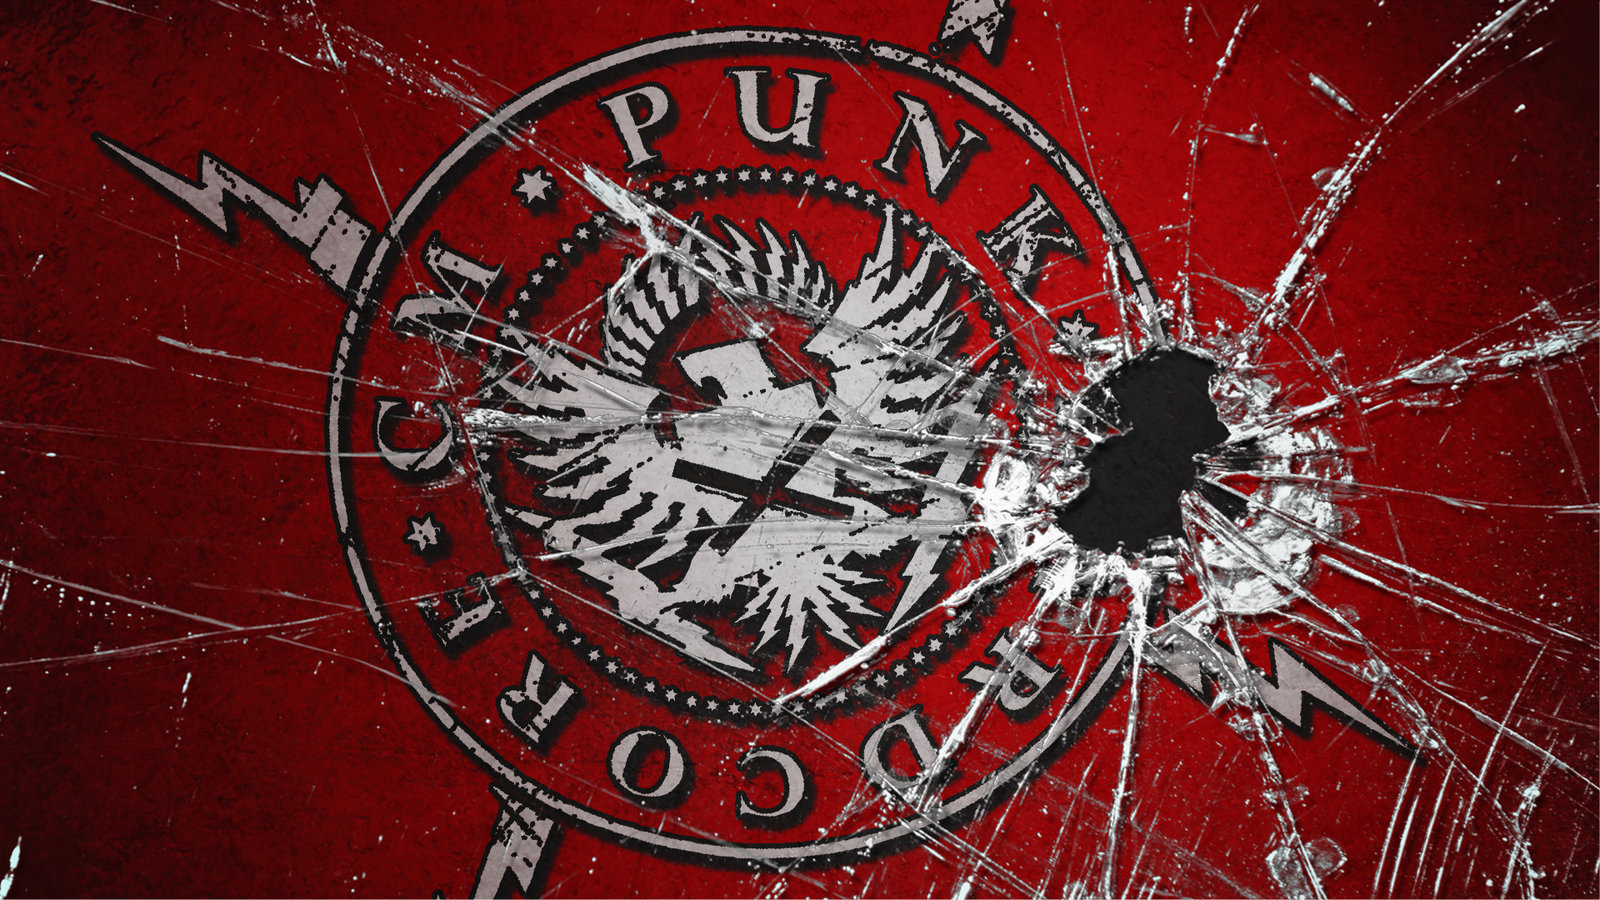 cm punk logo wallpaper #13